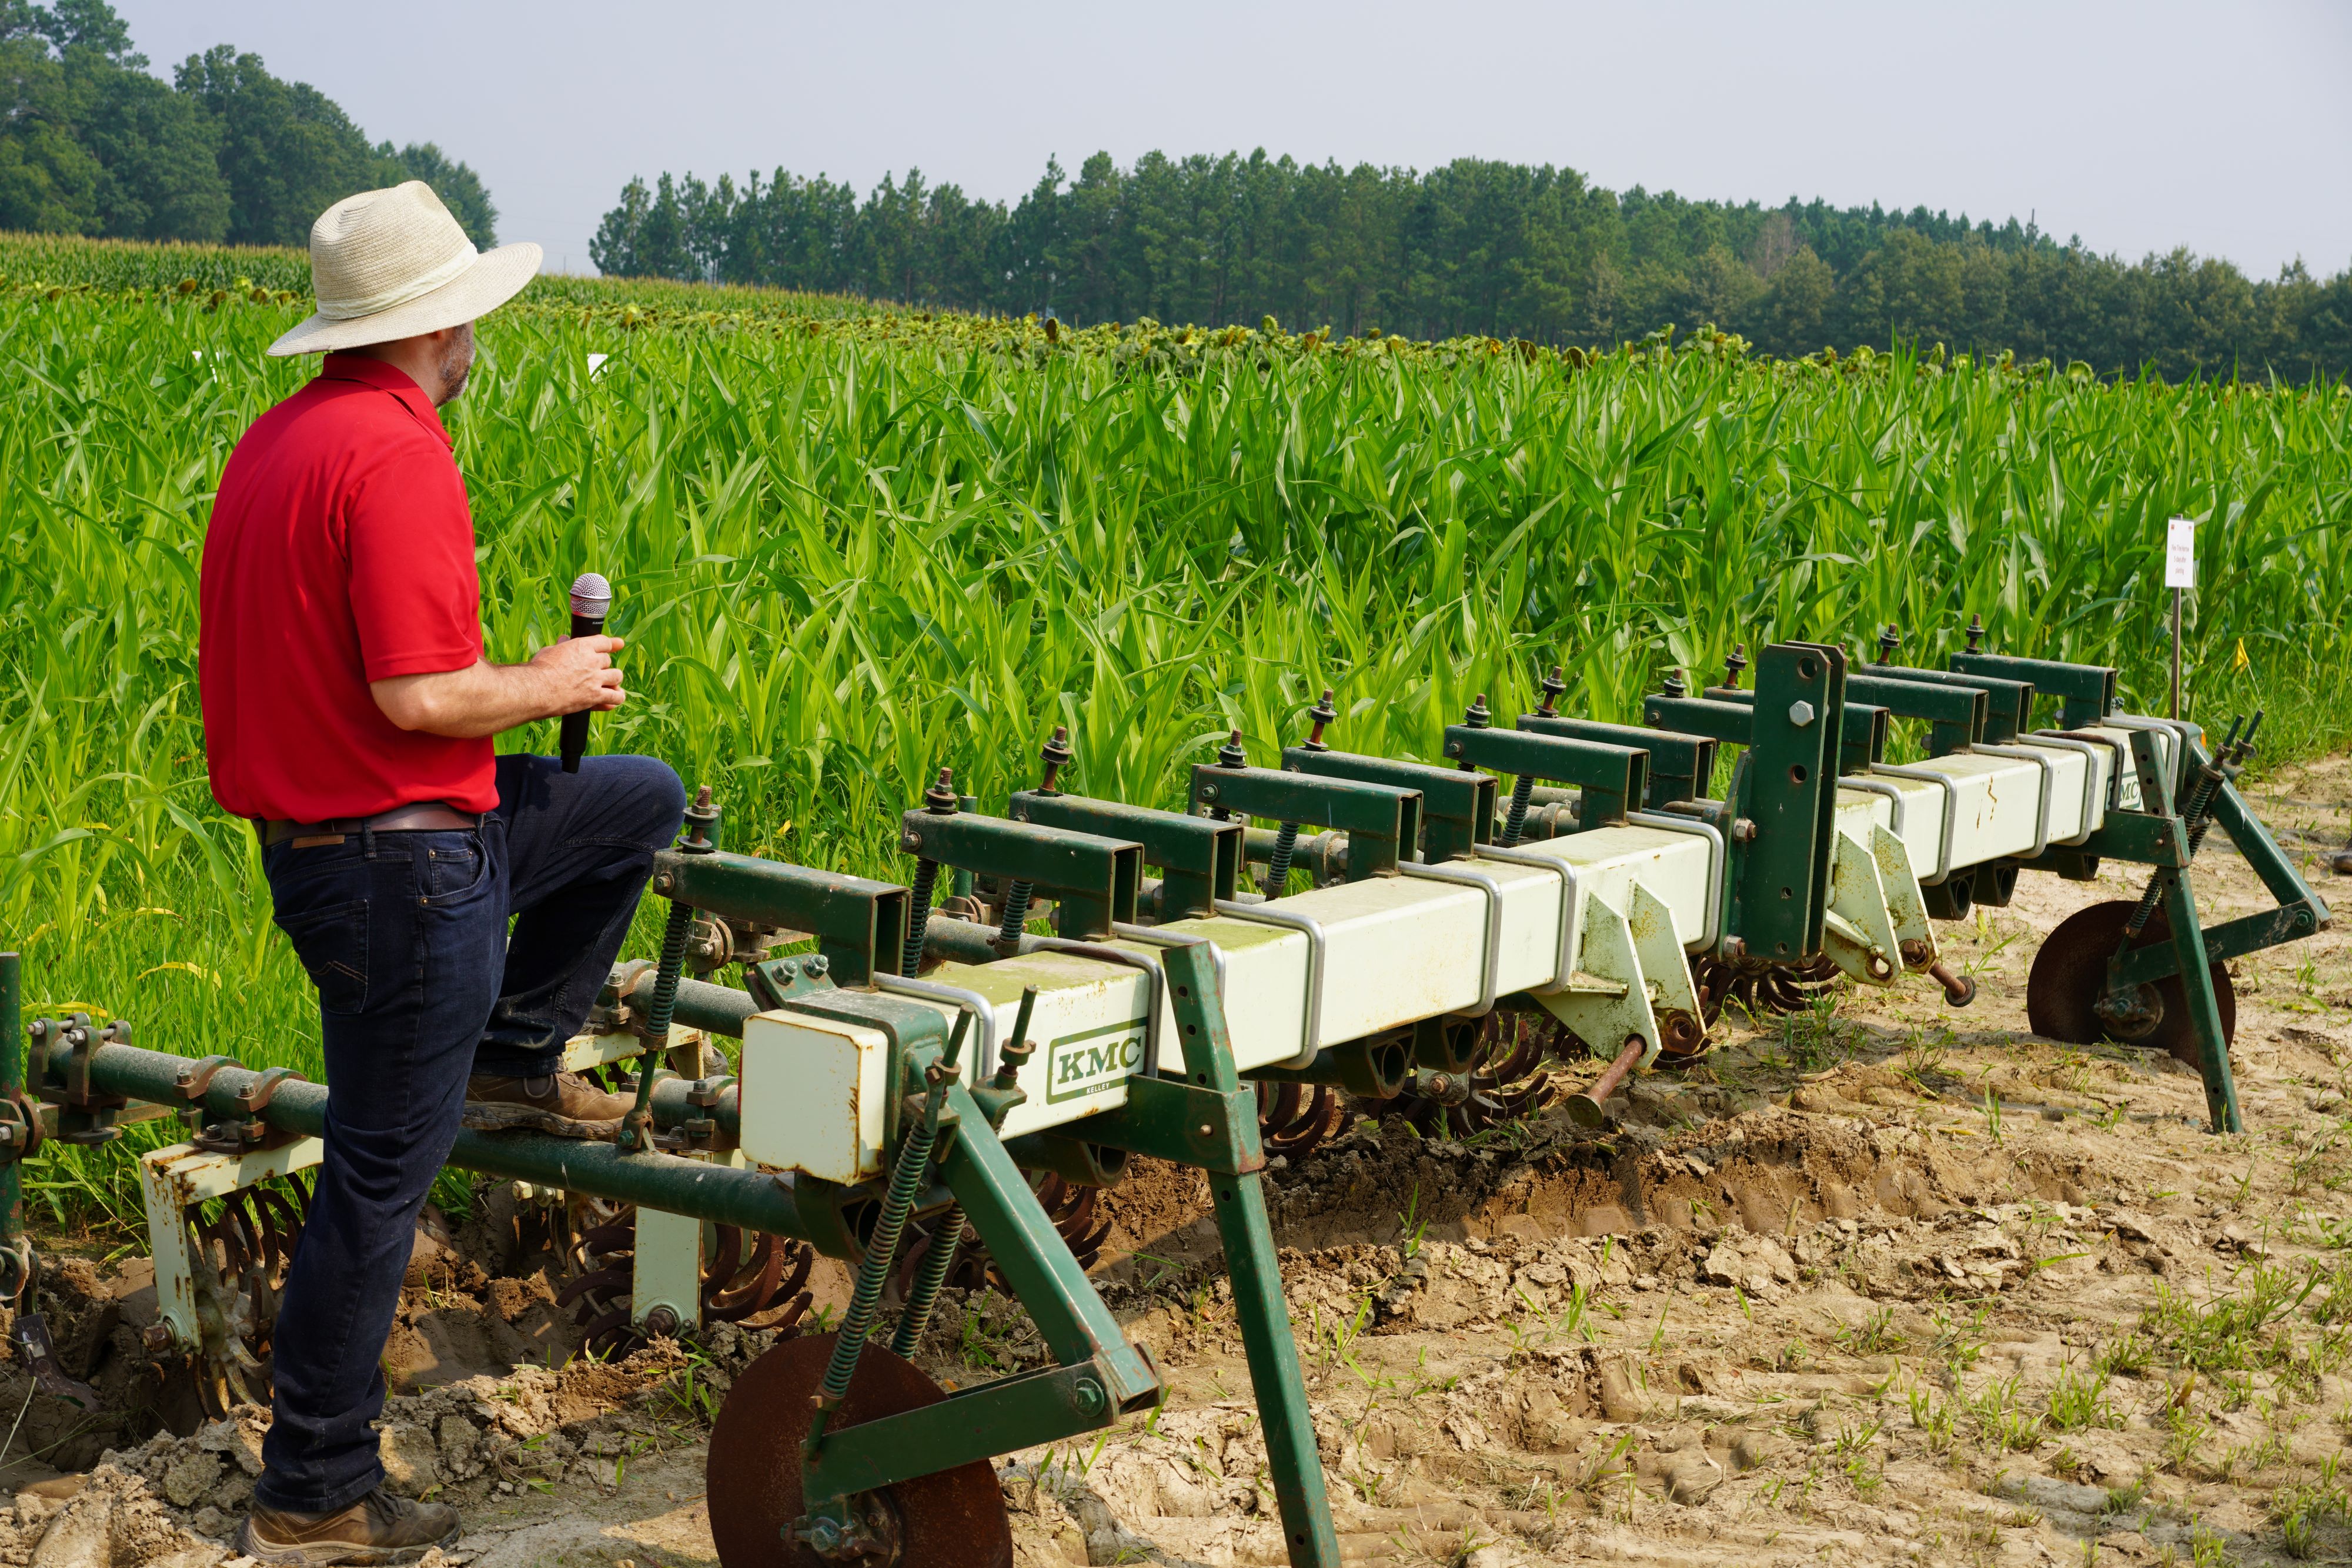 A man discusses farm equipment in a field.